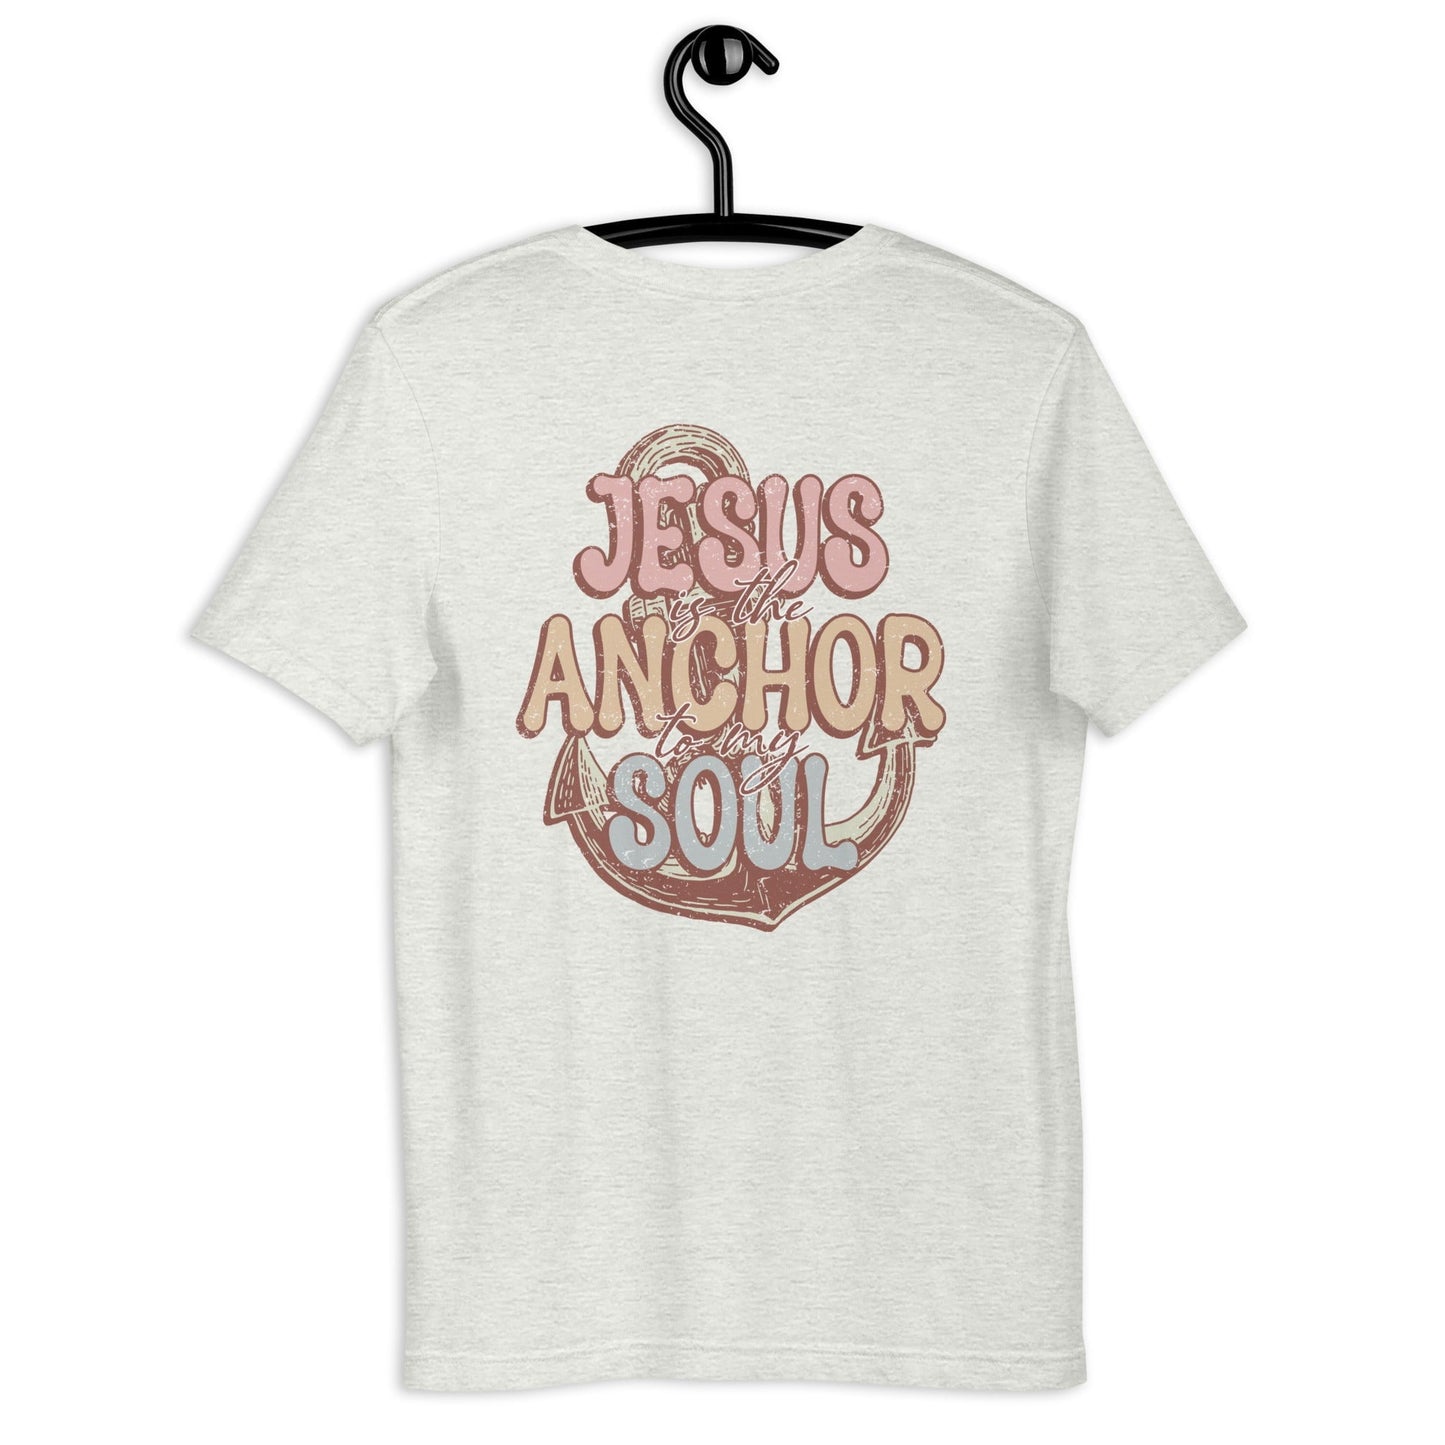 Anchor Jesus apparel t-shirt